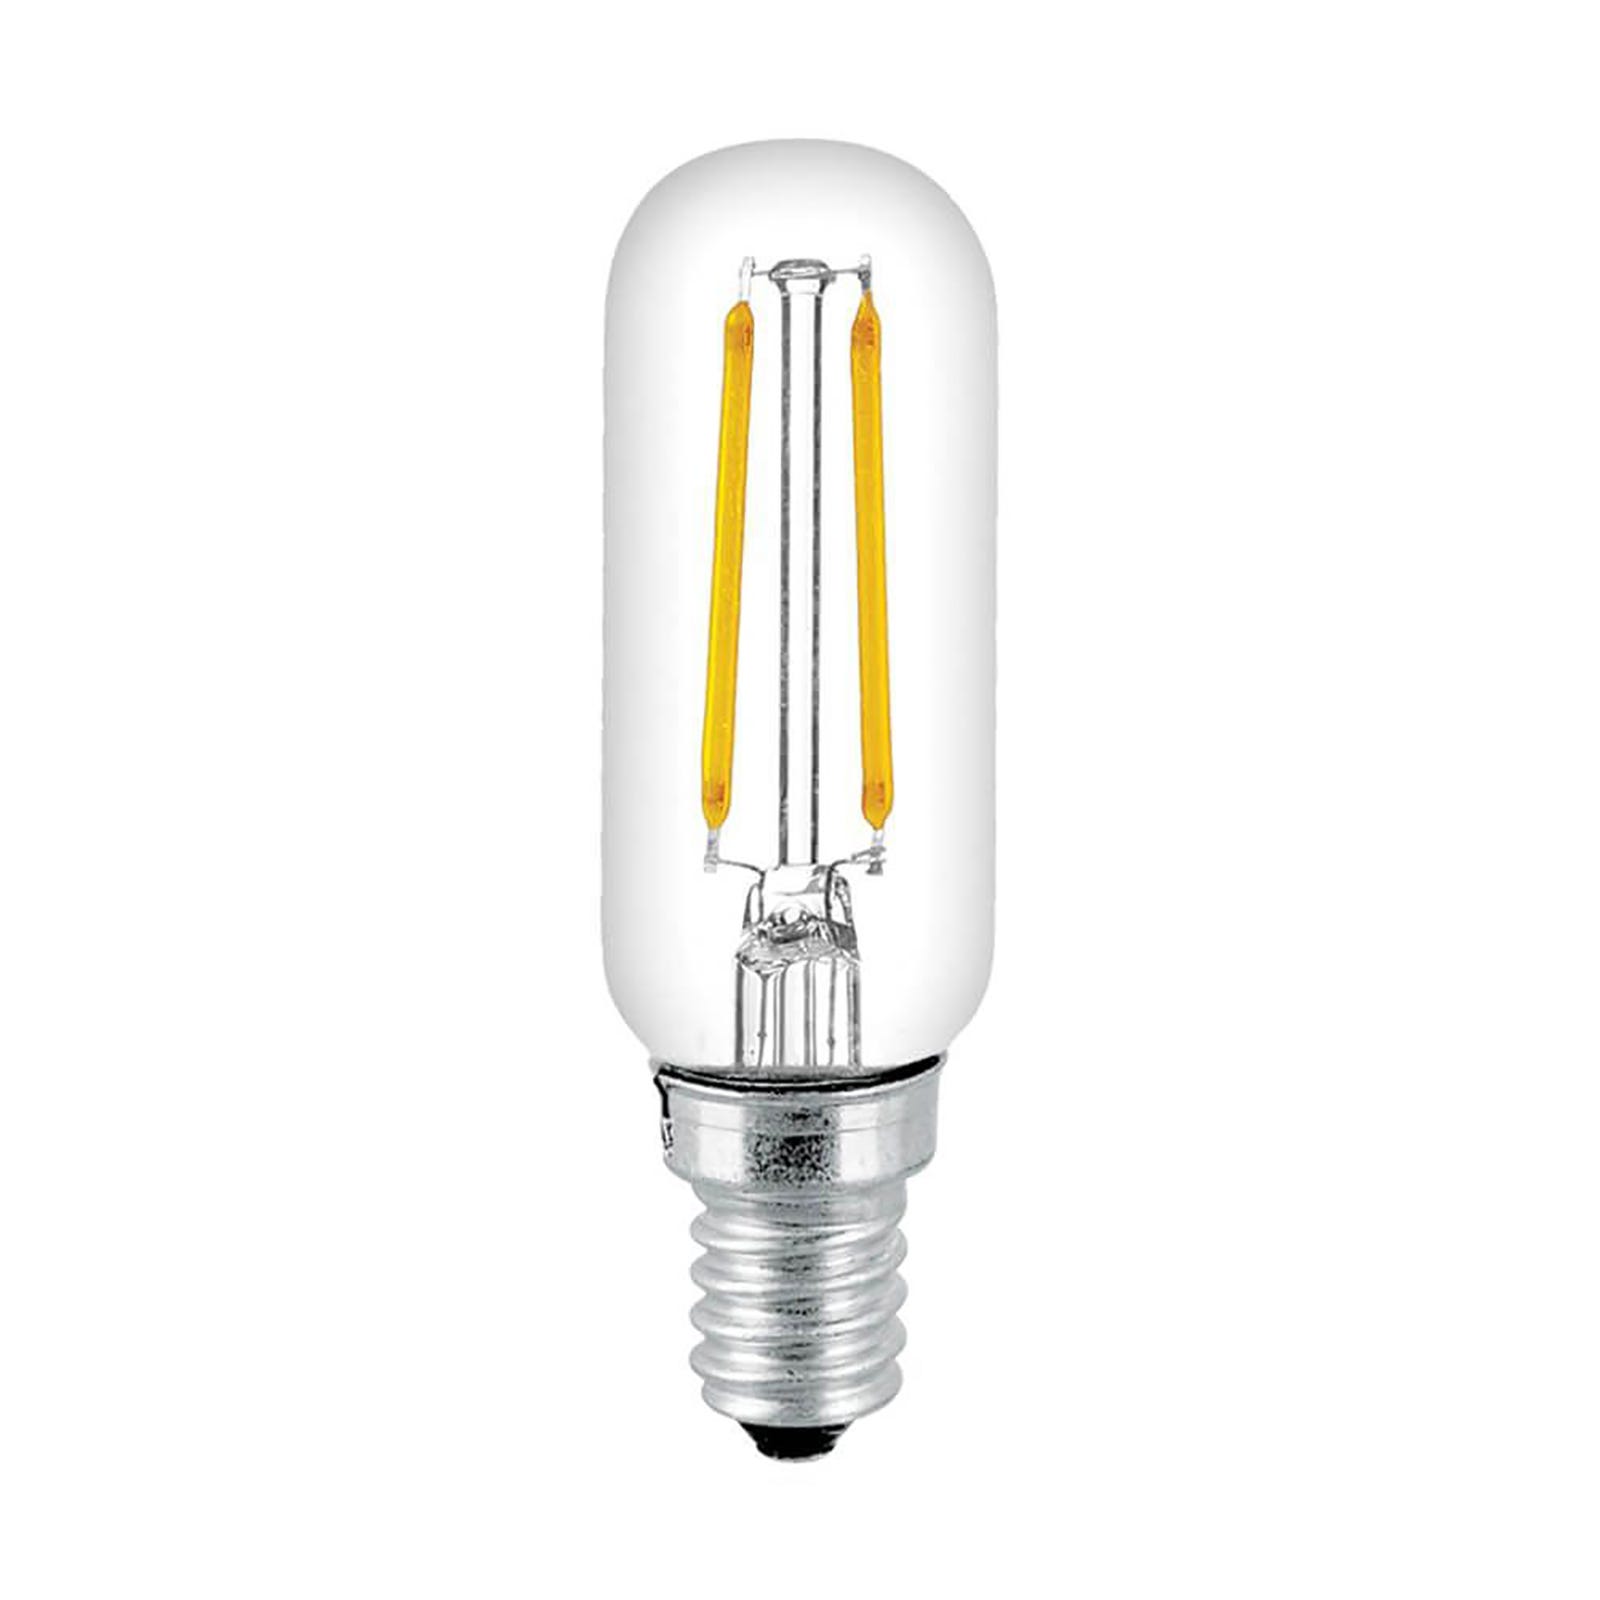 Lampadina mini lampada LED attacco piccolo E14 3W vetro resa 30W luce  naturale 4000K 330 lumen luce frigo cappa 230V